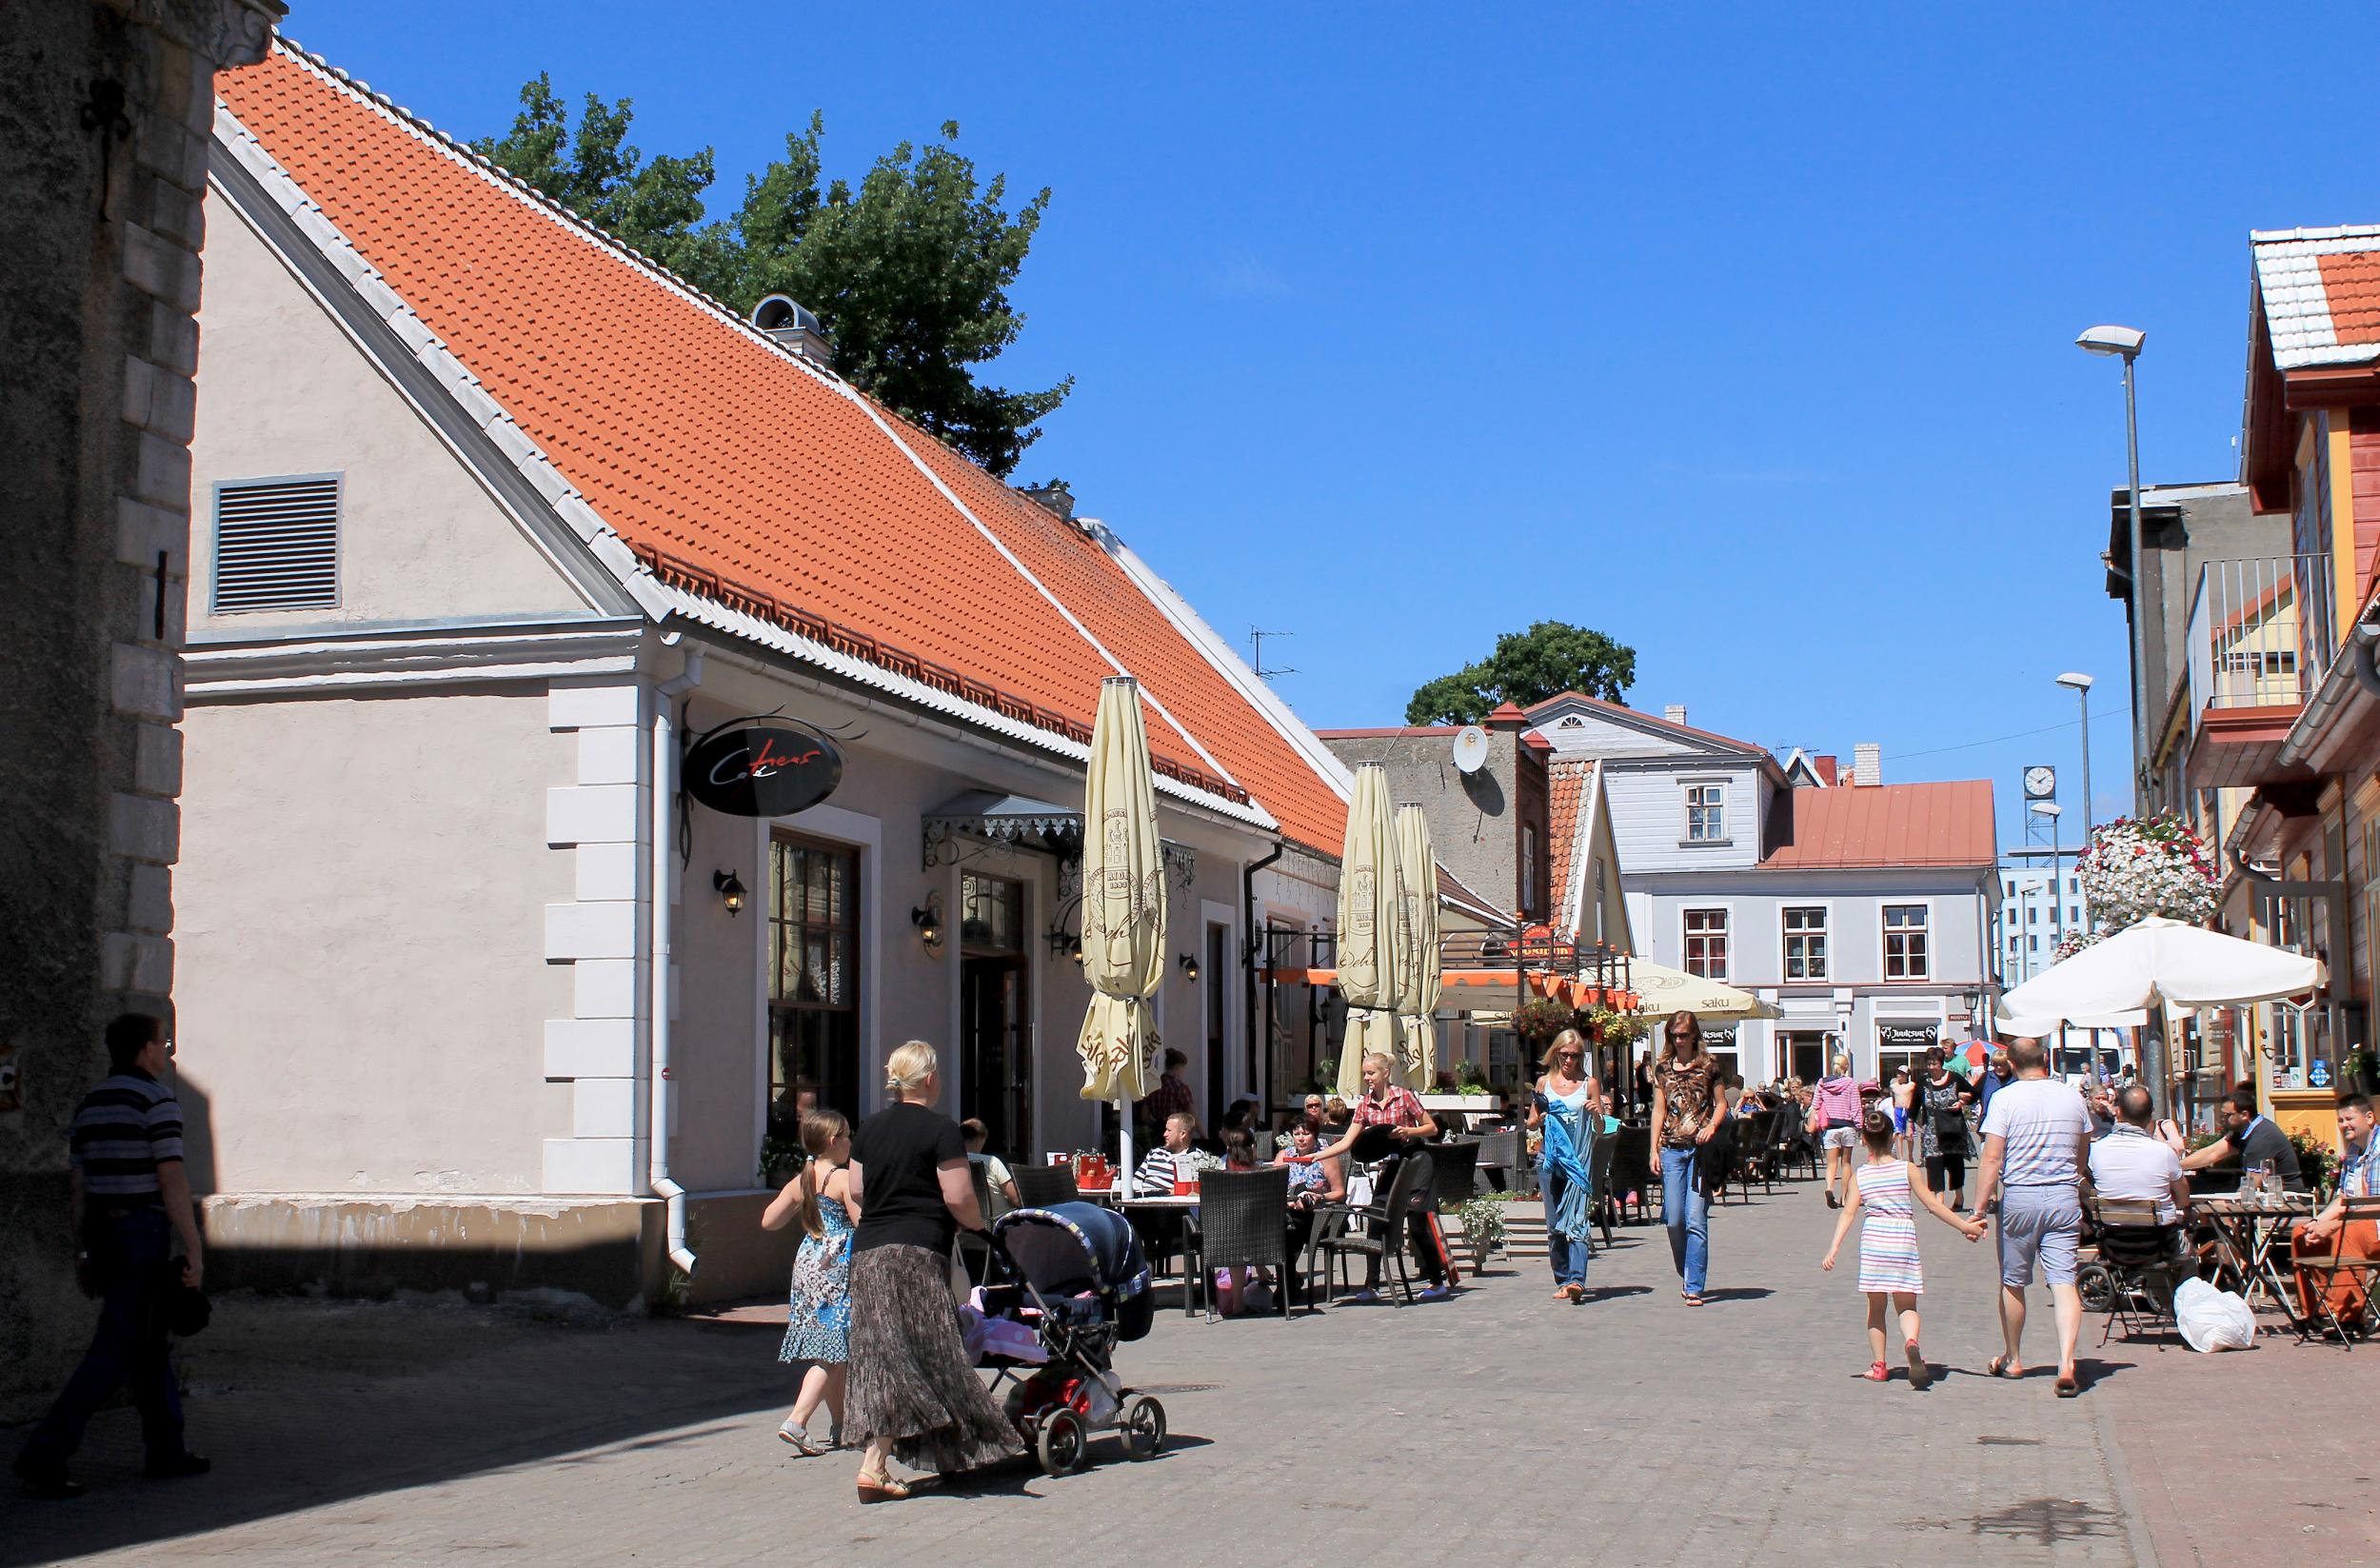 Free range: Parnu’s old town in Estonia